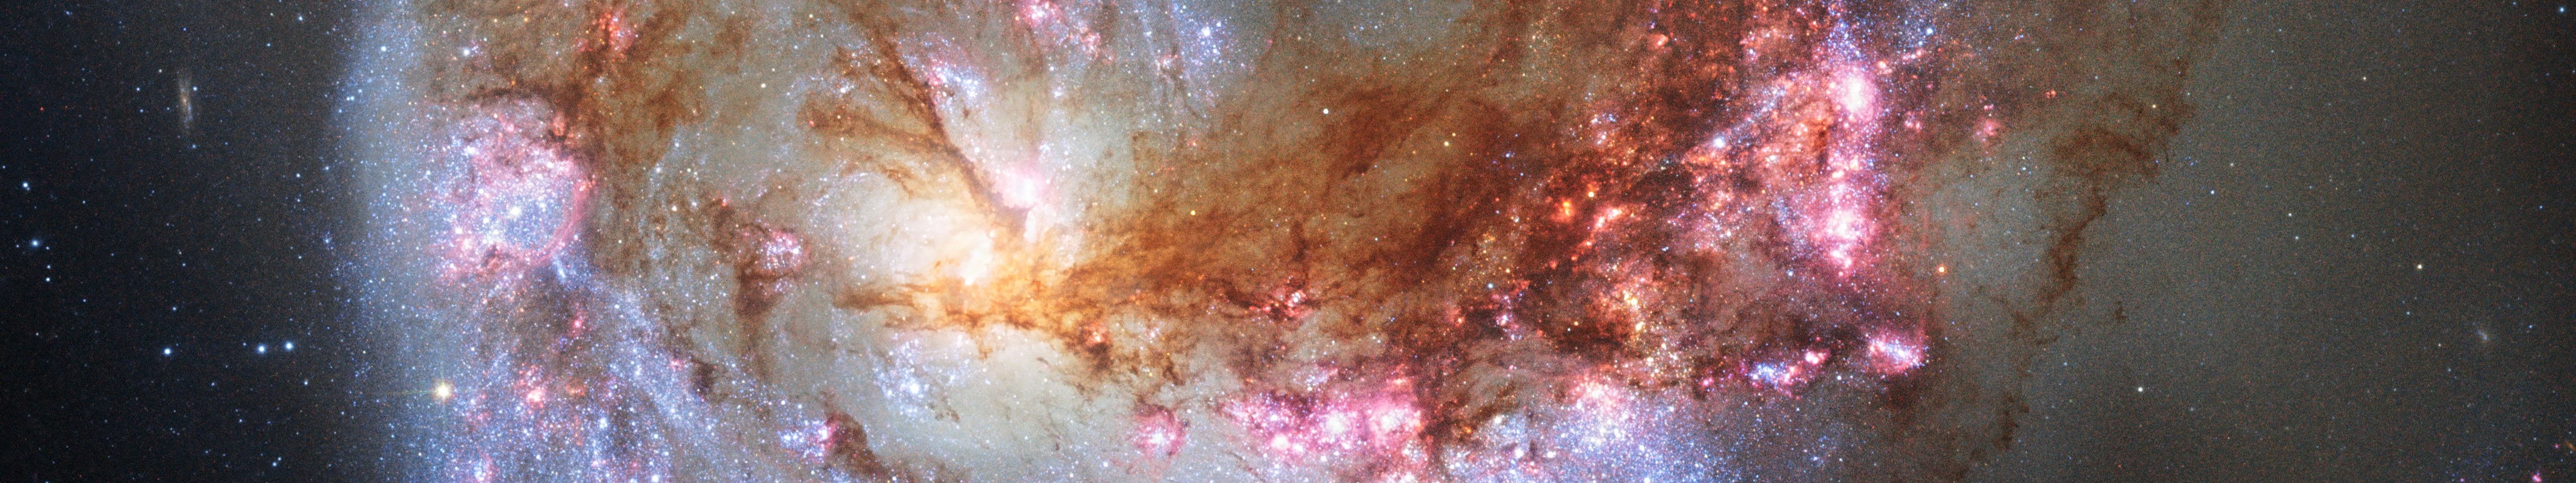 space, suns, nebula, multiple display, stars, galaxy, Hubble Deep Field